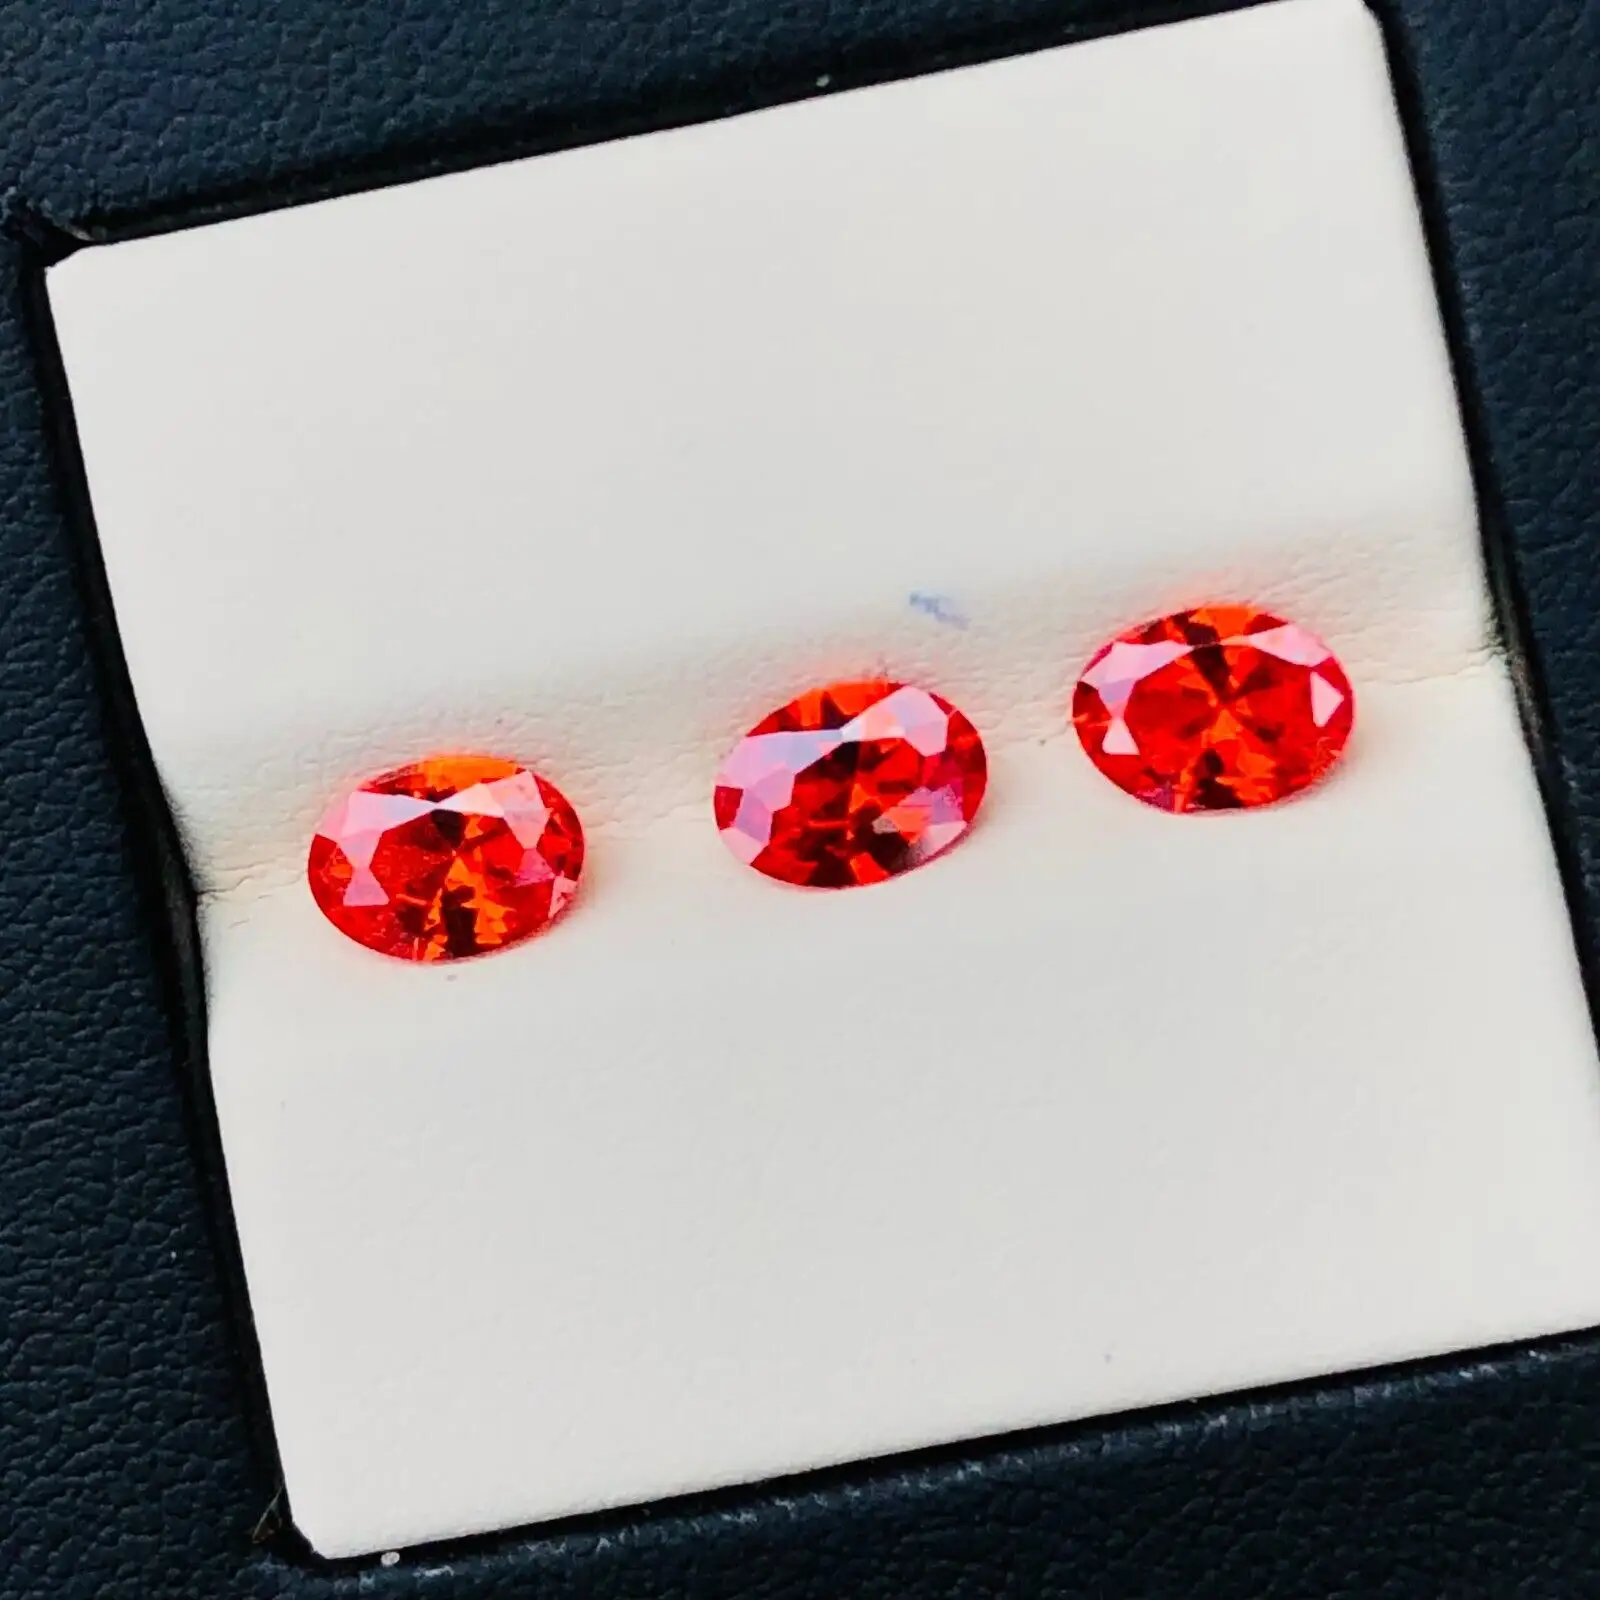 Amazing Orang cubic zirconia Oval loose calibrated Size gemstone jewelry Handmade Bulk Product High Quality Gemstones